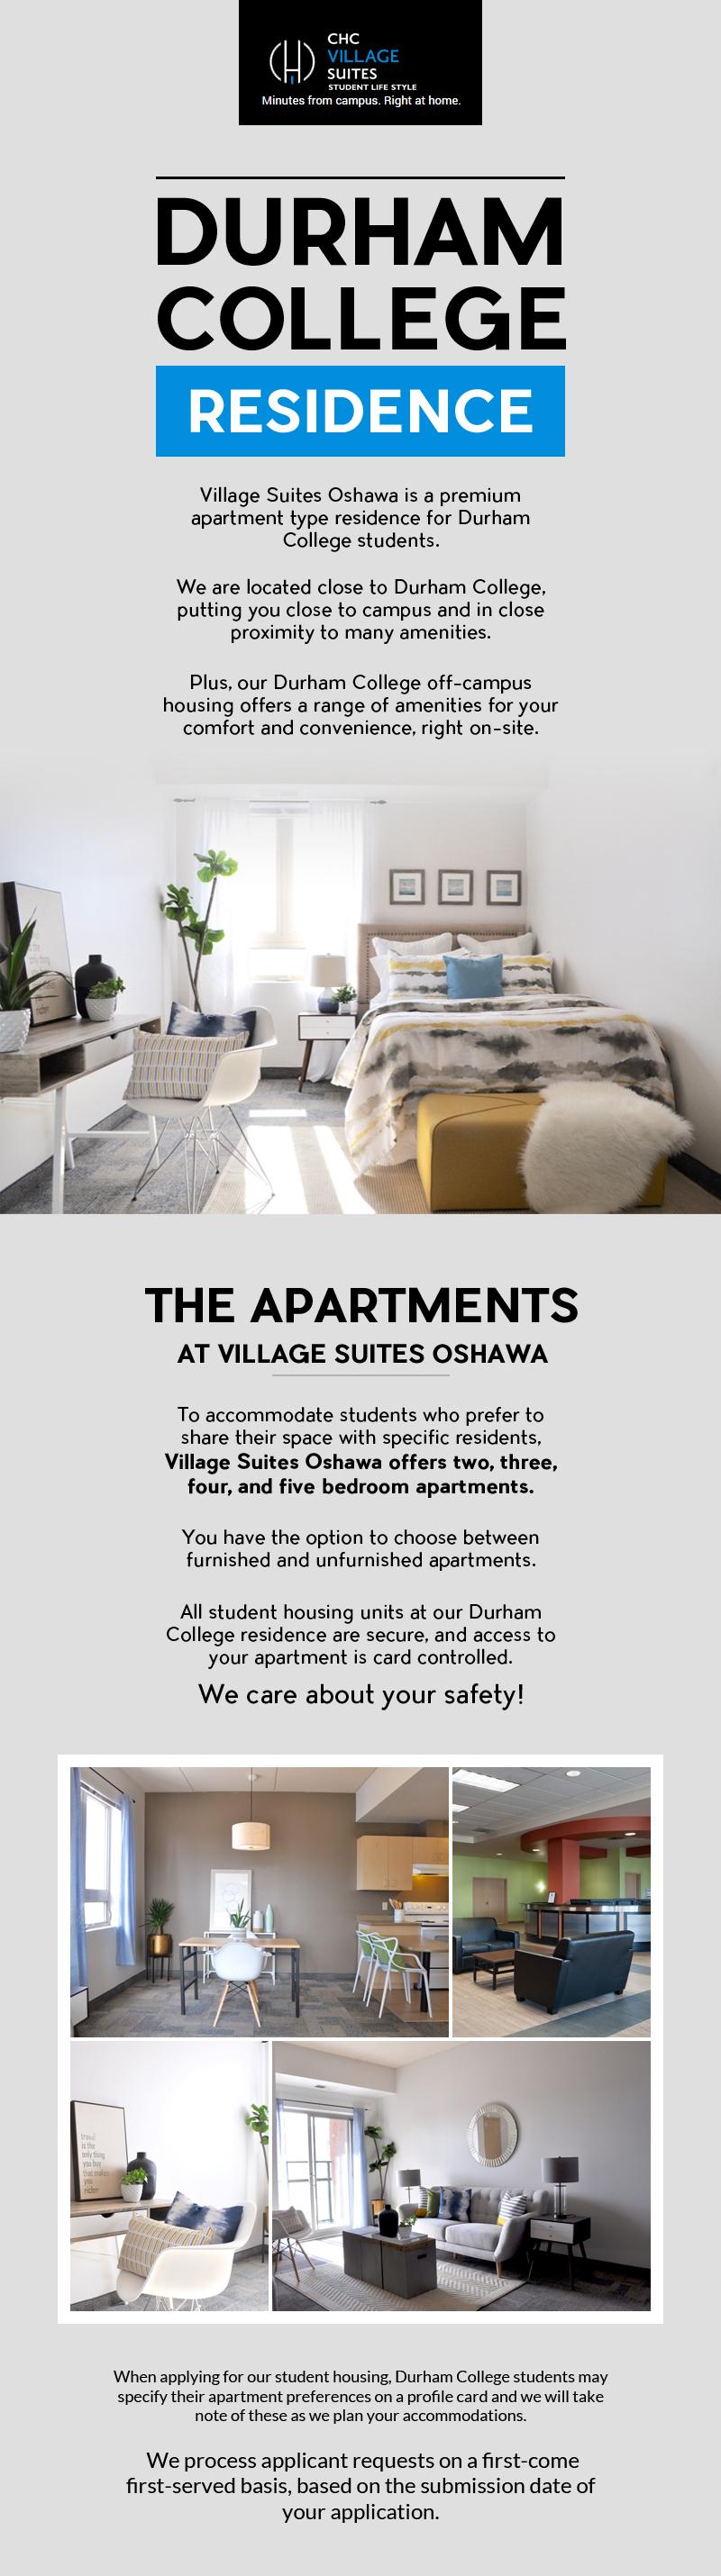 Village Suites Oshawa - Premium Student Residence Near Durham College